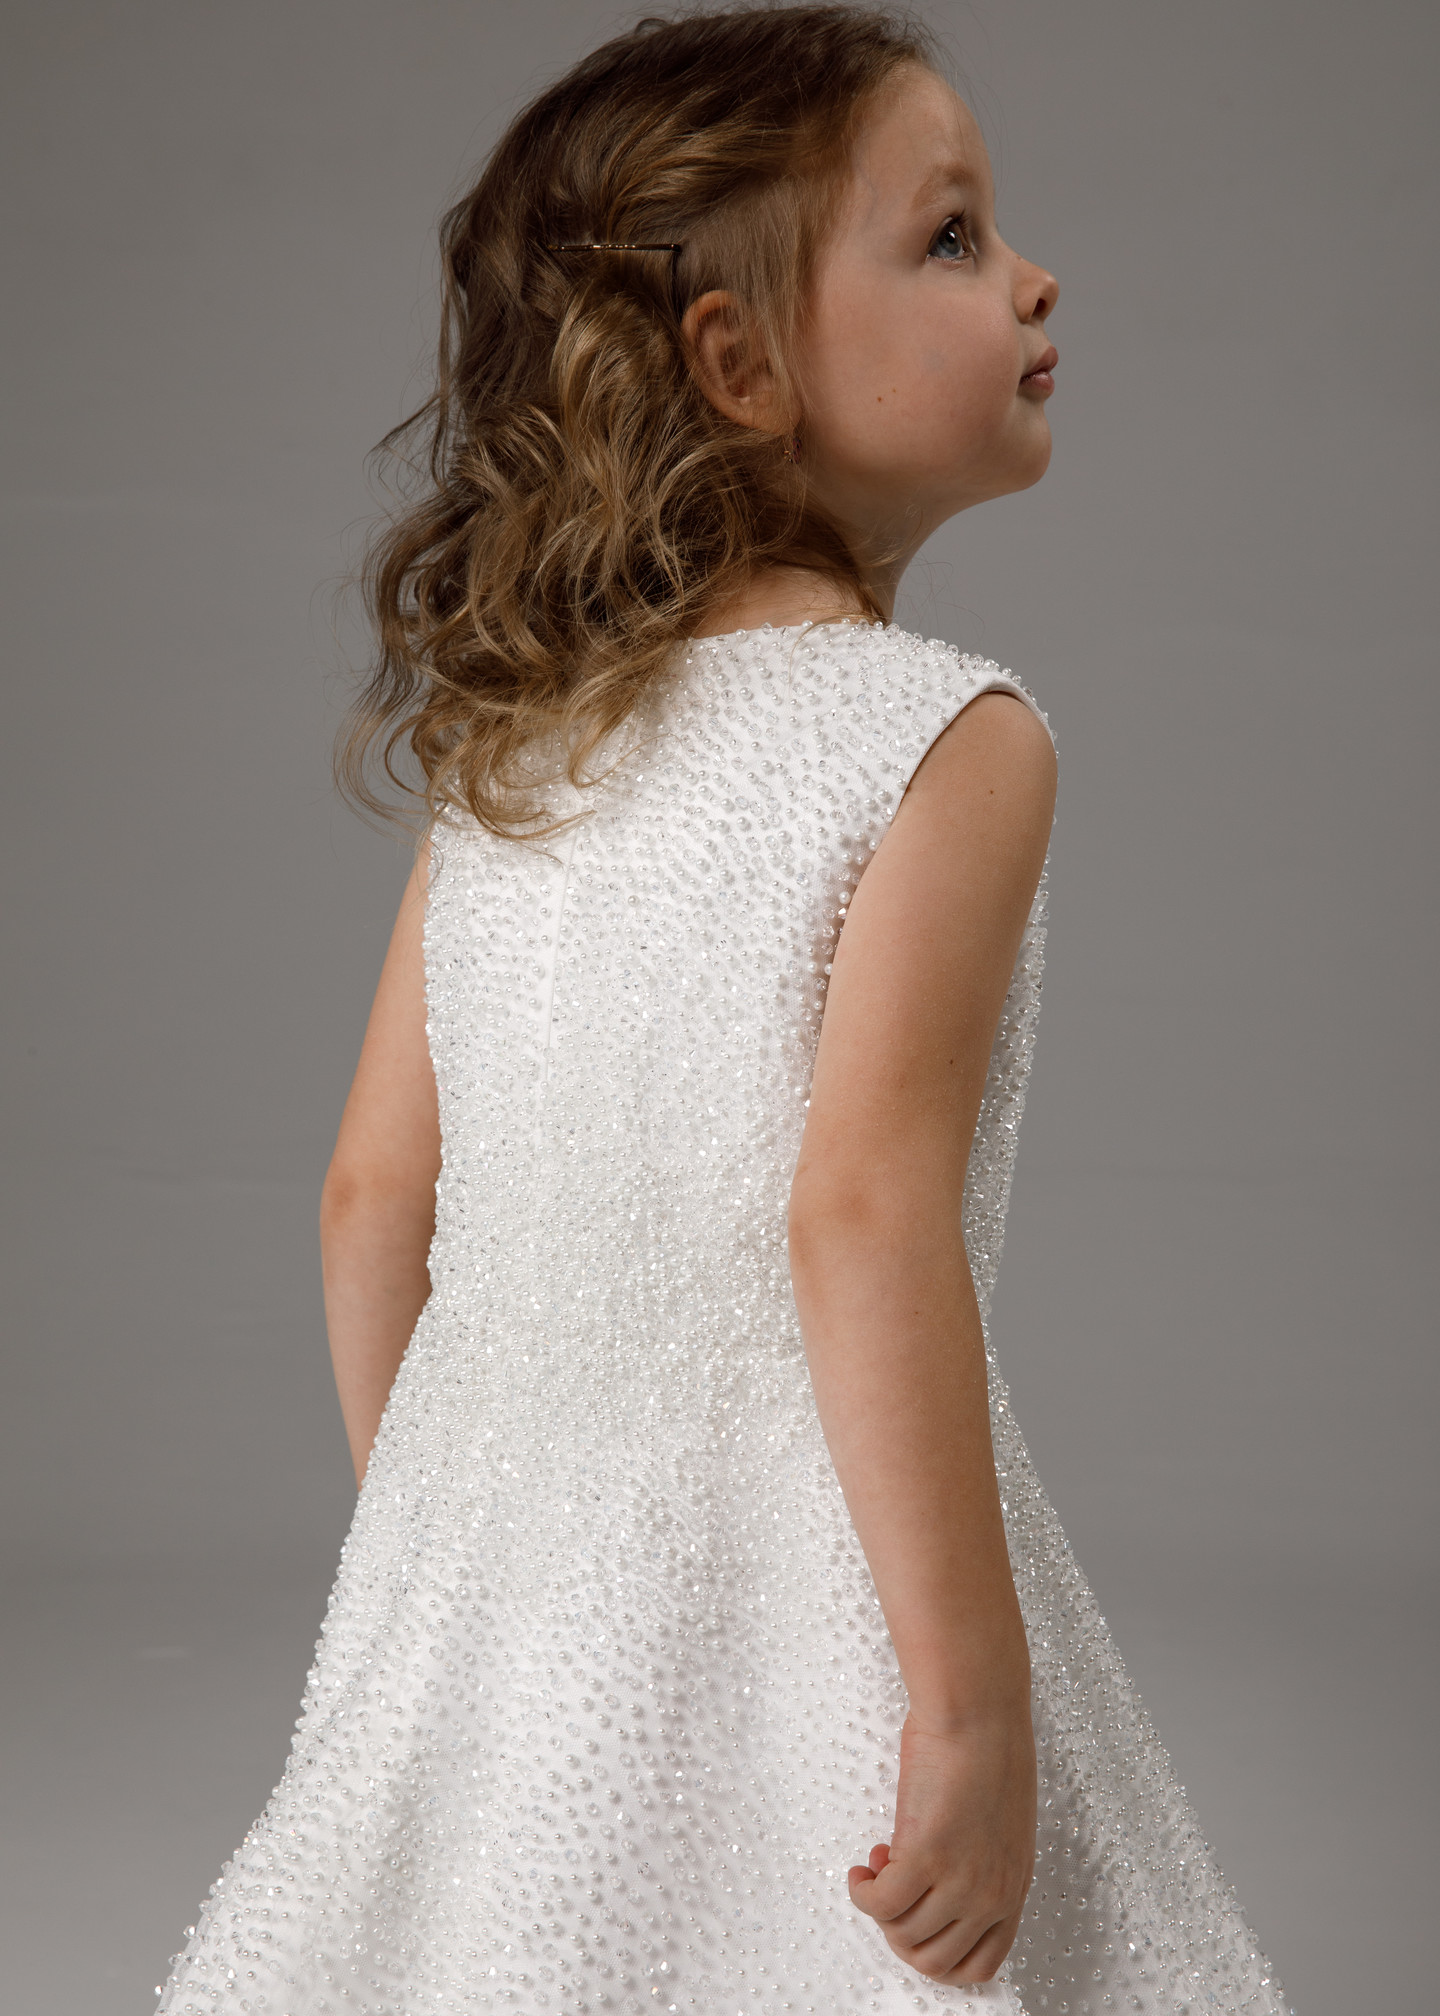 Flower girl dress fully beaded, 2021, couture, child dress, child, off-white, satin, embroidery, flower girl